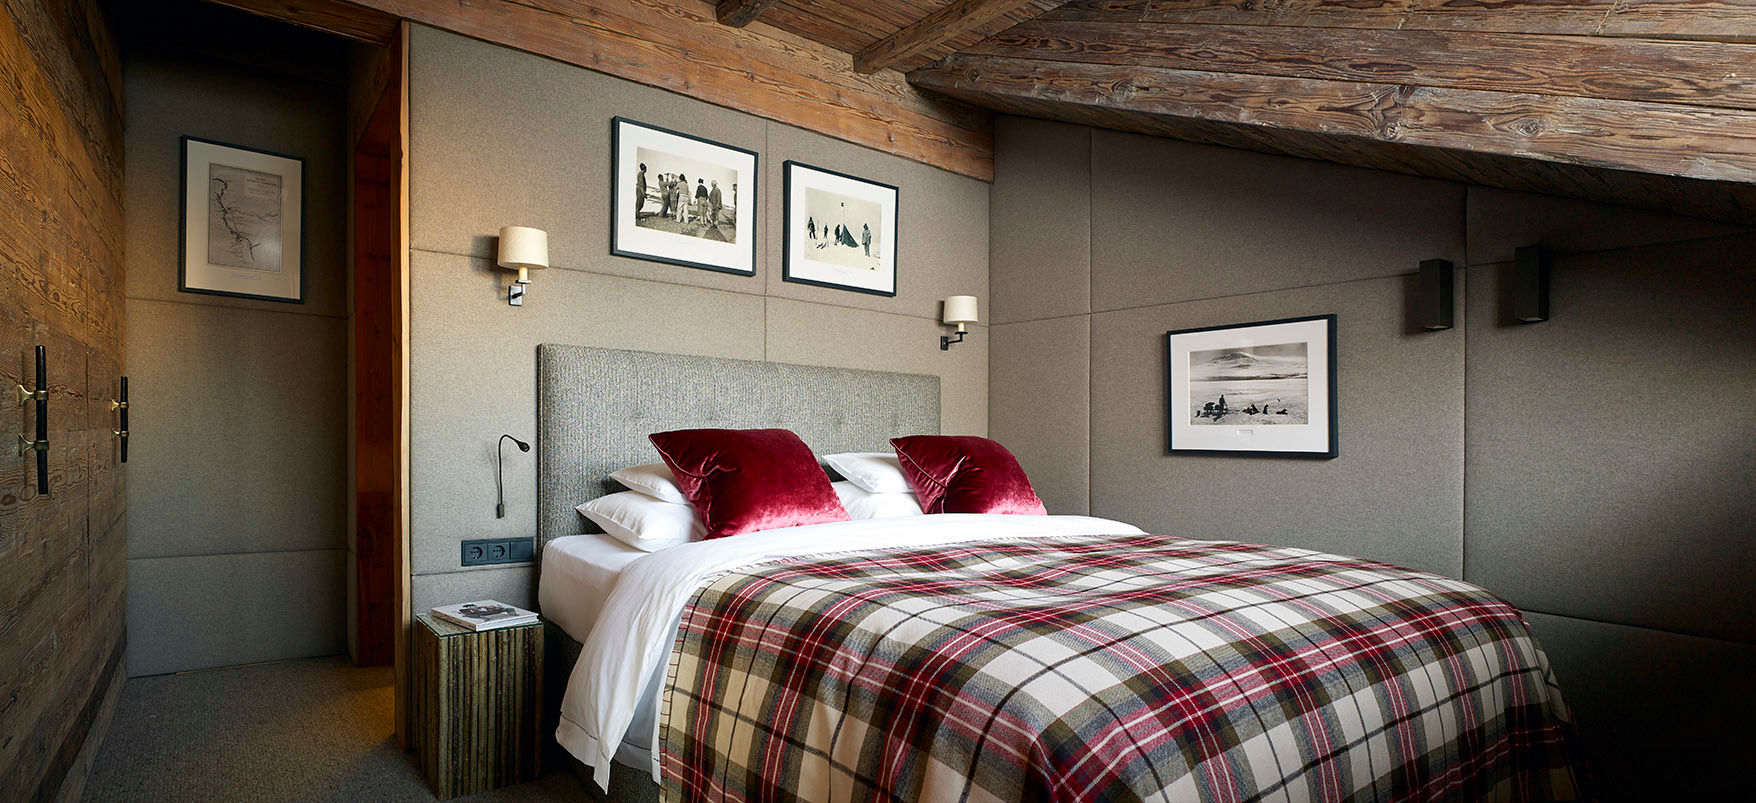 Skyfall Bedroom Architectural Interiors + Superyacht Photographer Scandinavische slaapkamers